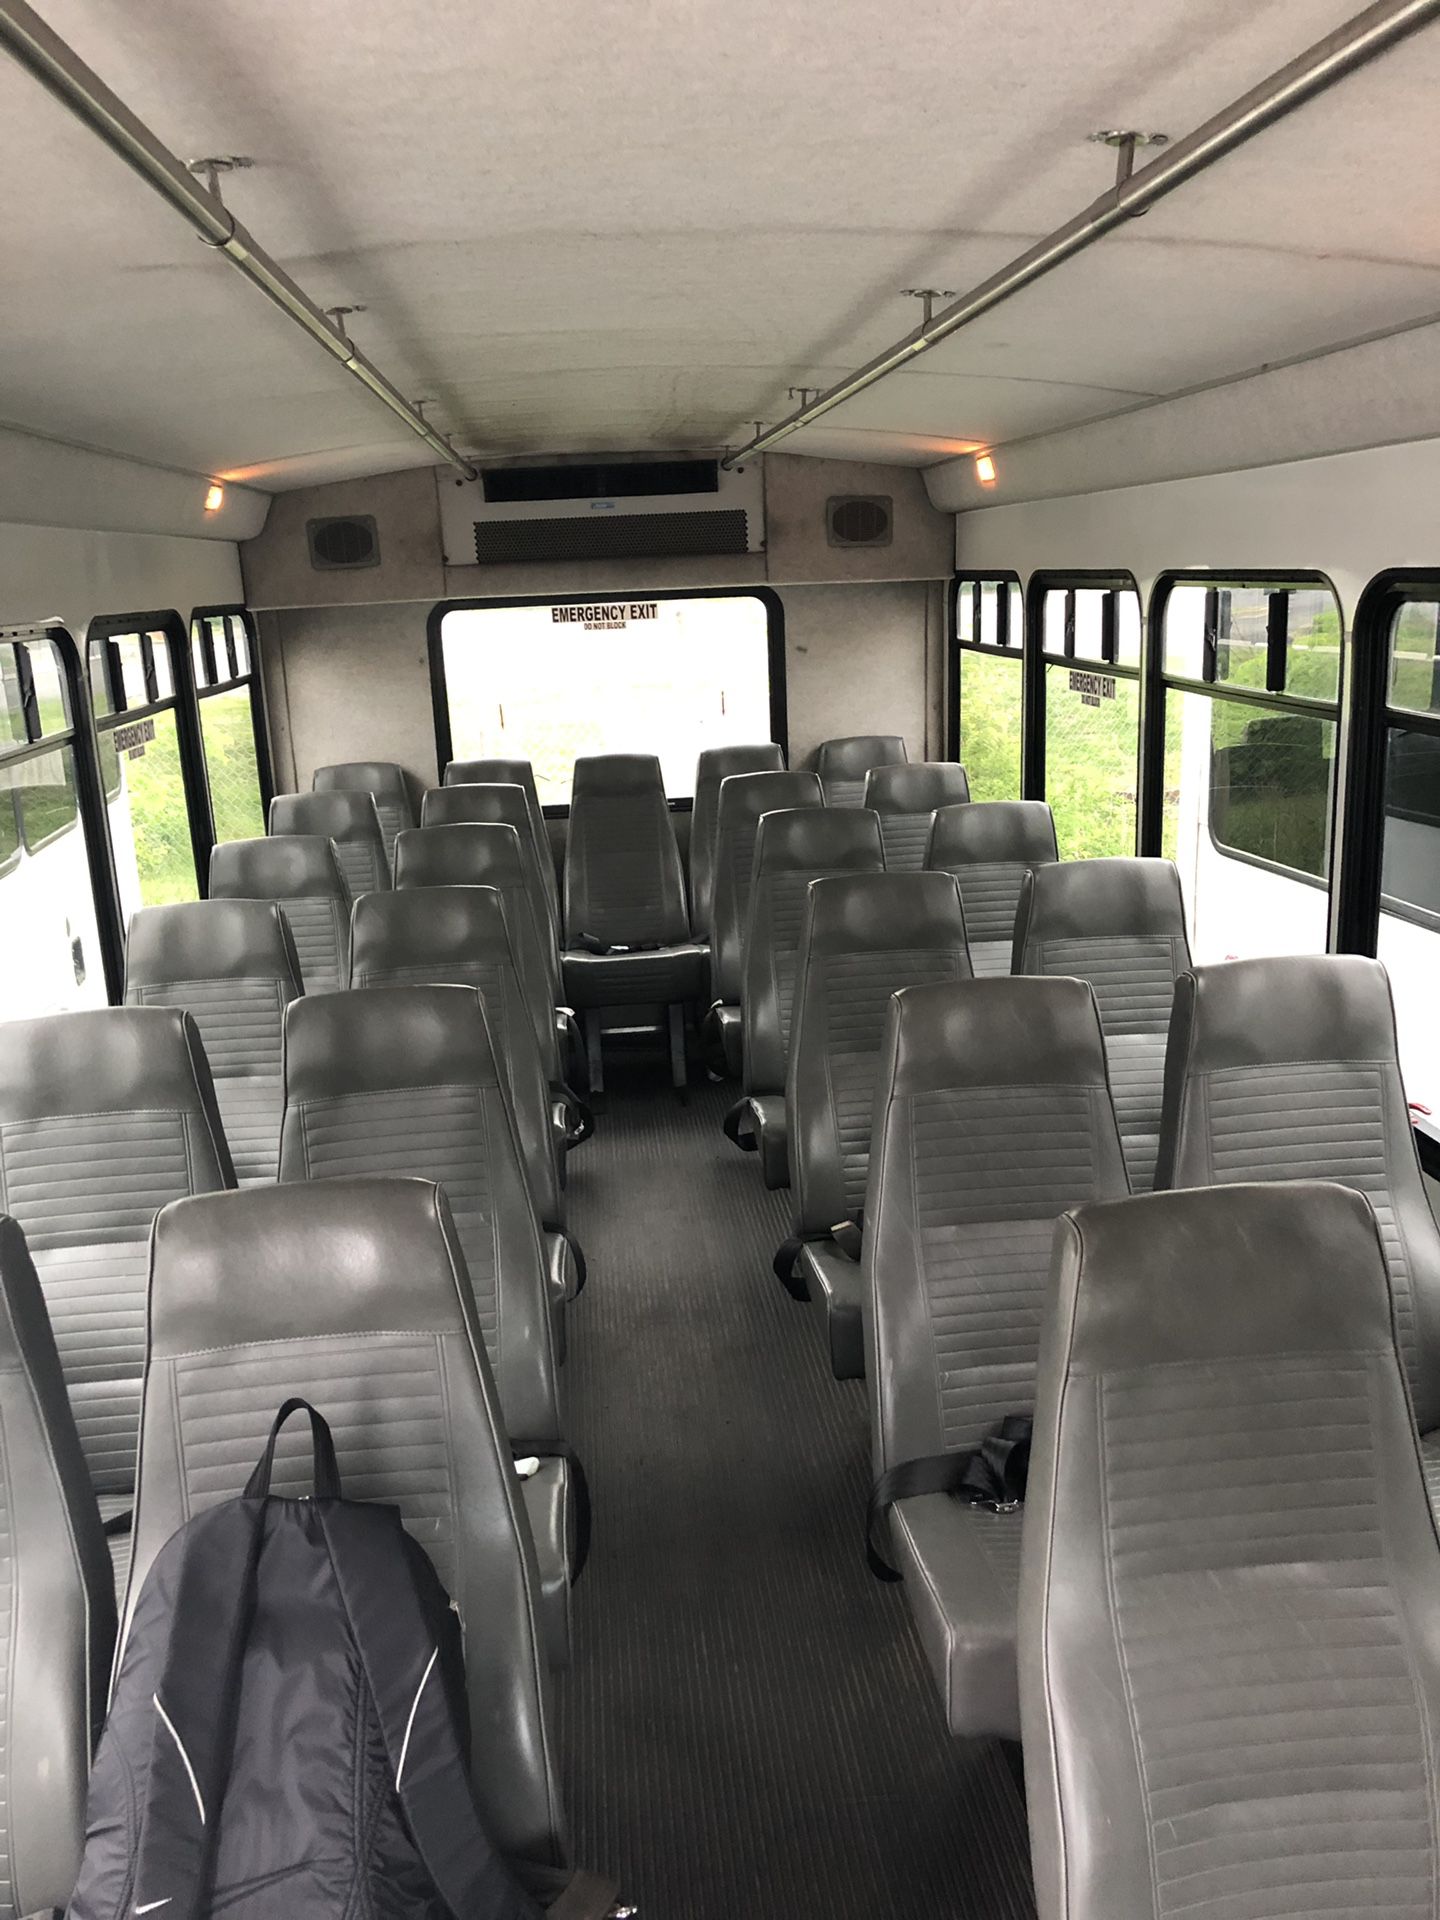 Bus seats-shuttle RV seat